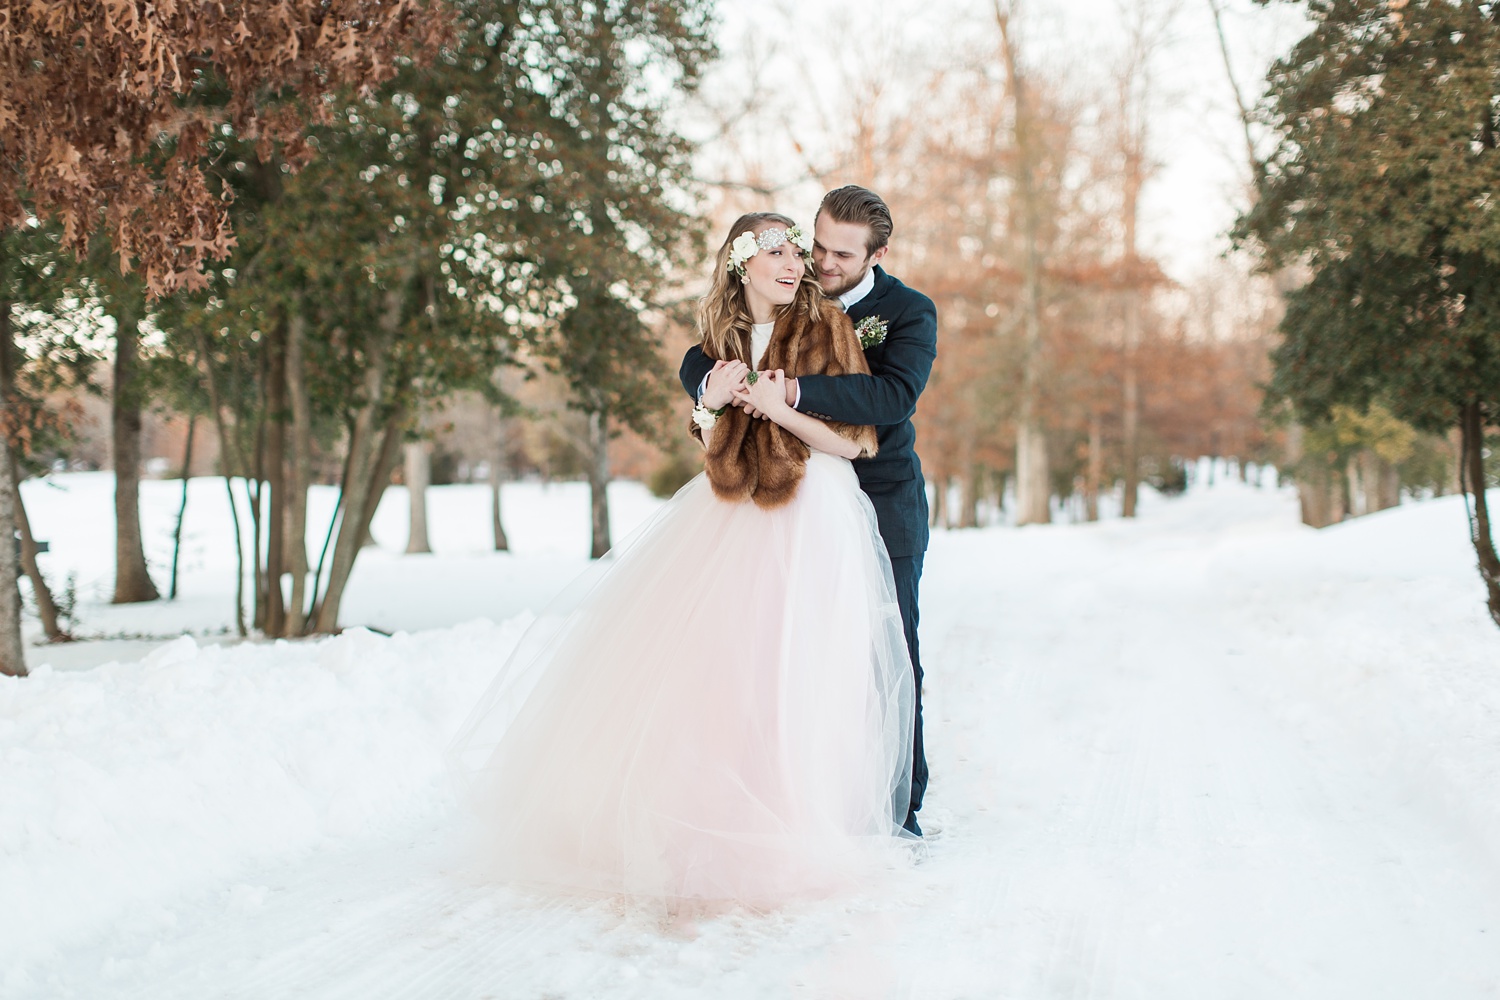 South Jersey Wedding Photography | Winter Garden Wedding Inspiration | Running Deer Golf Club Wedding Photography